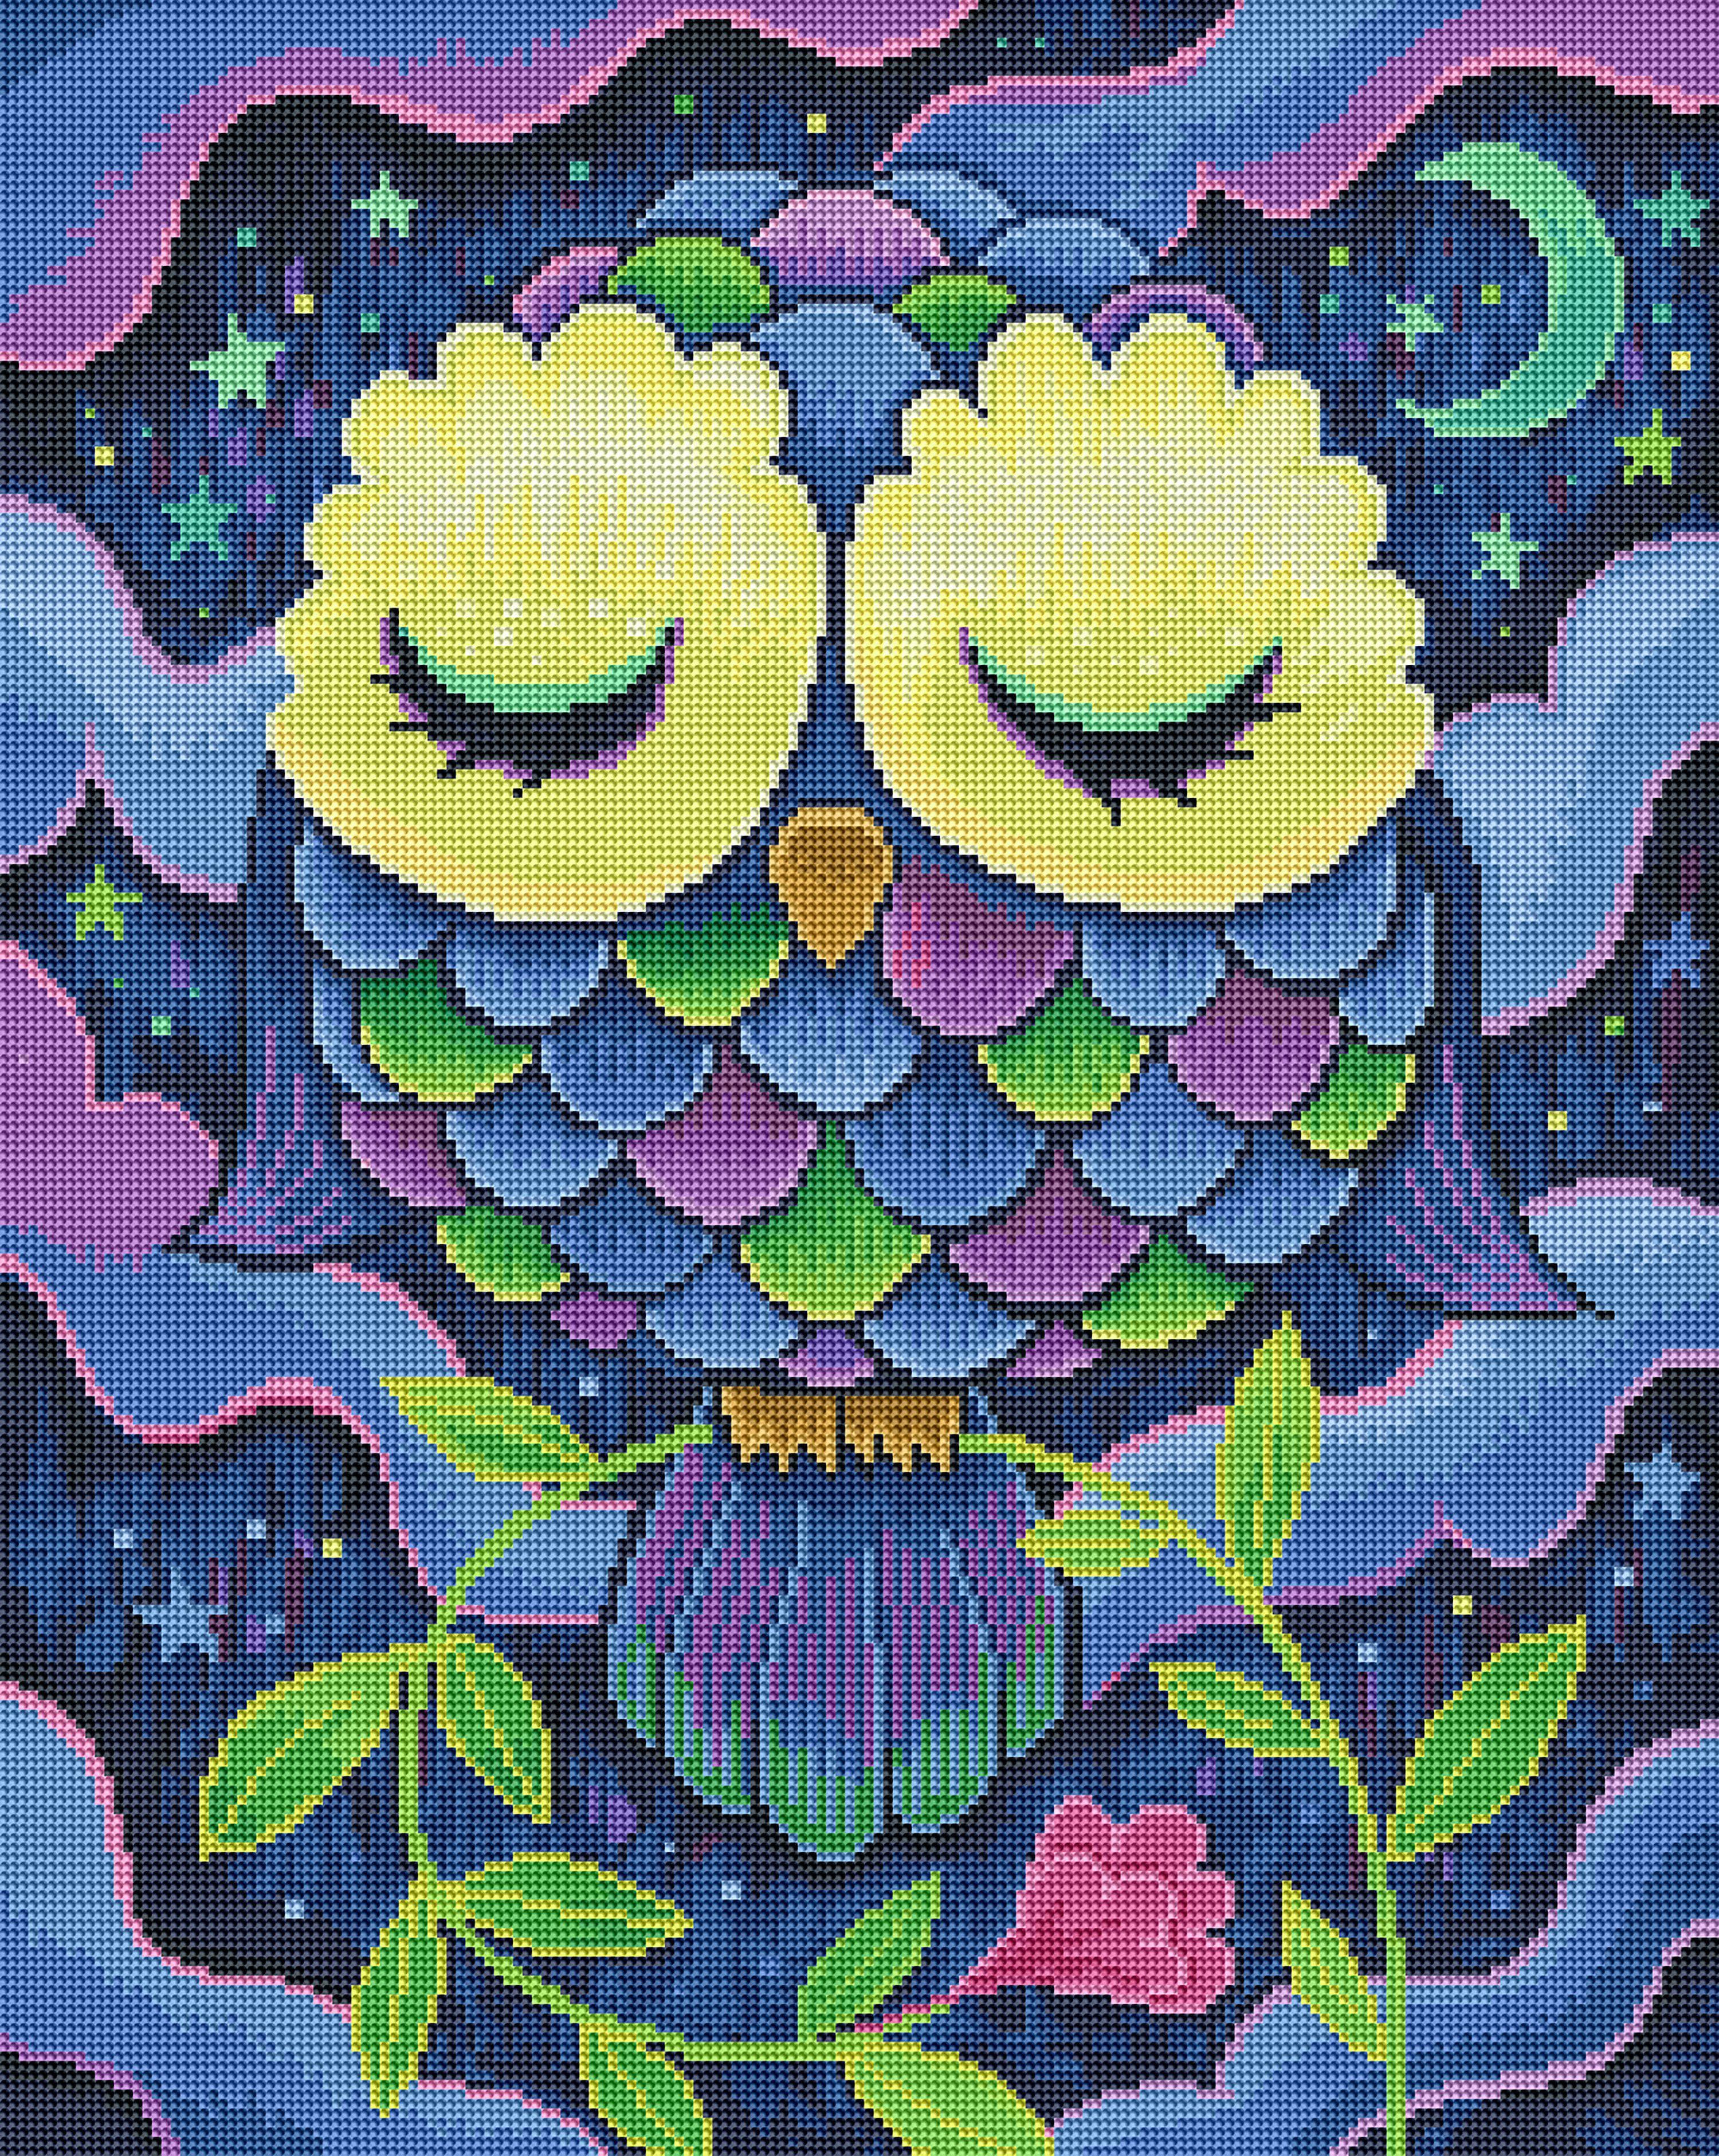 Mighty Owl - Glow in the Dark Diamond Painting